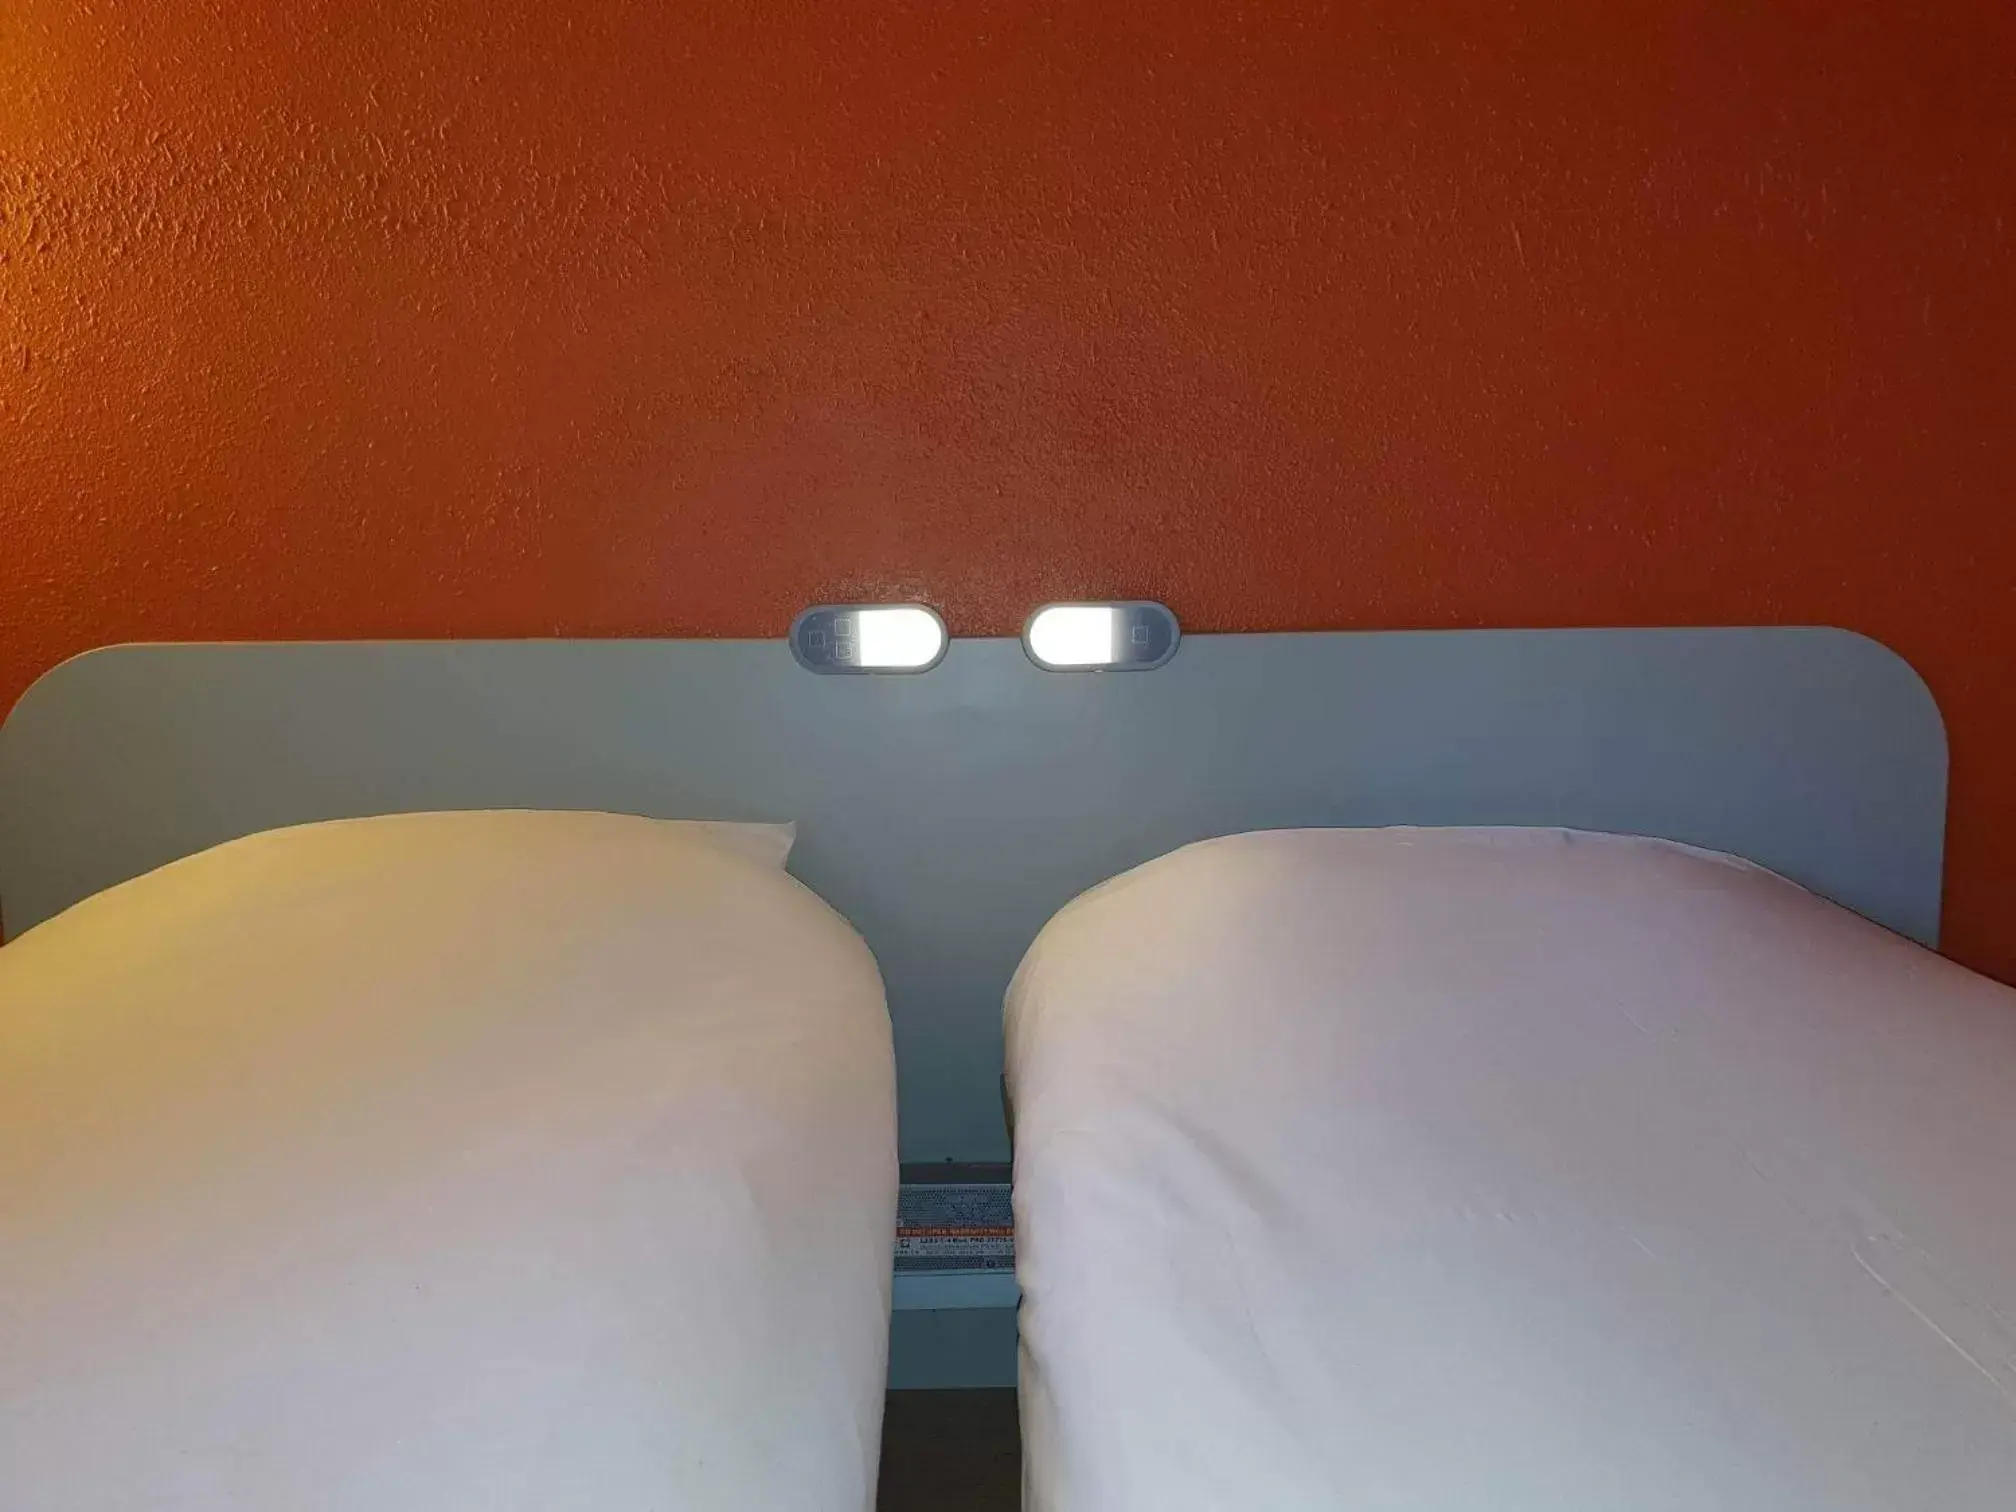 Bed in Cit'hotel Design Booking Evry Saint-Germain-lès-Corbeil Sénart